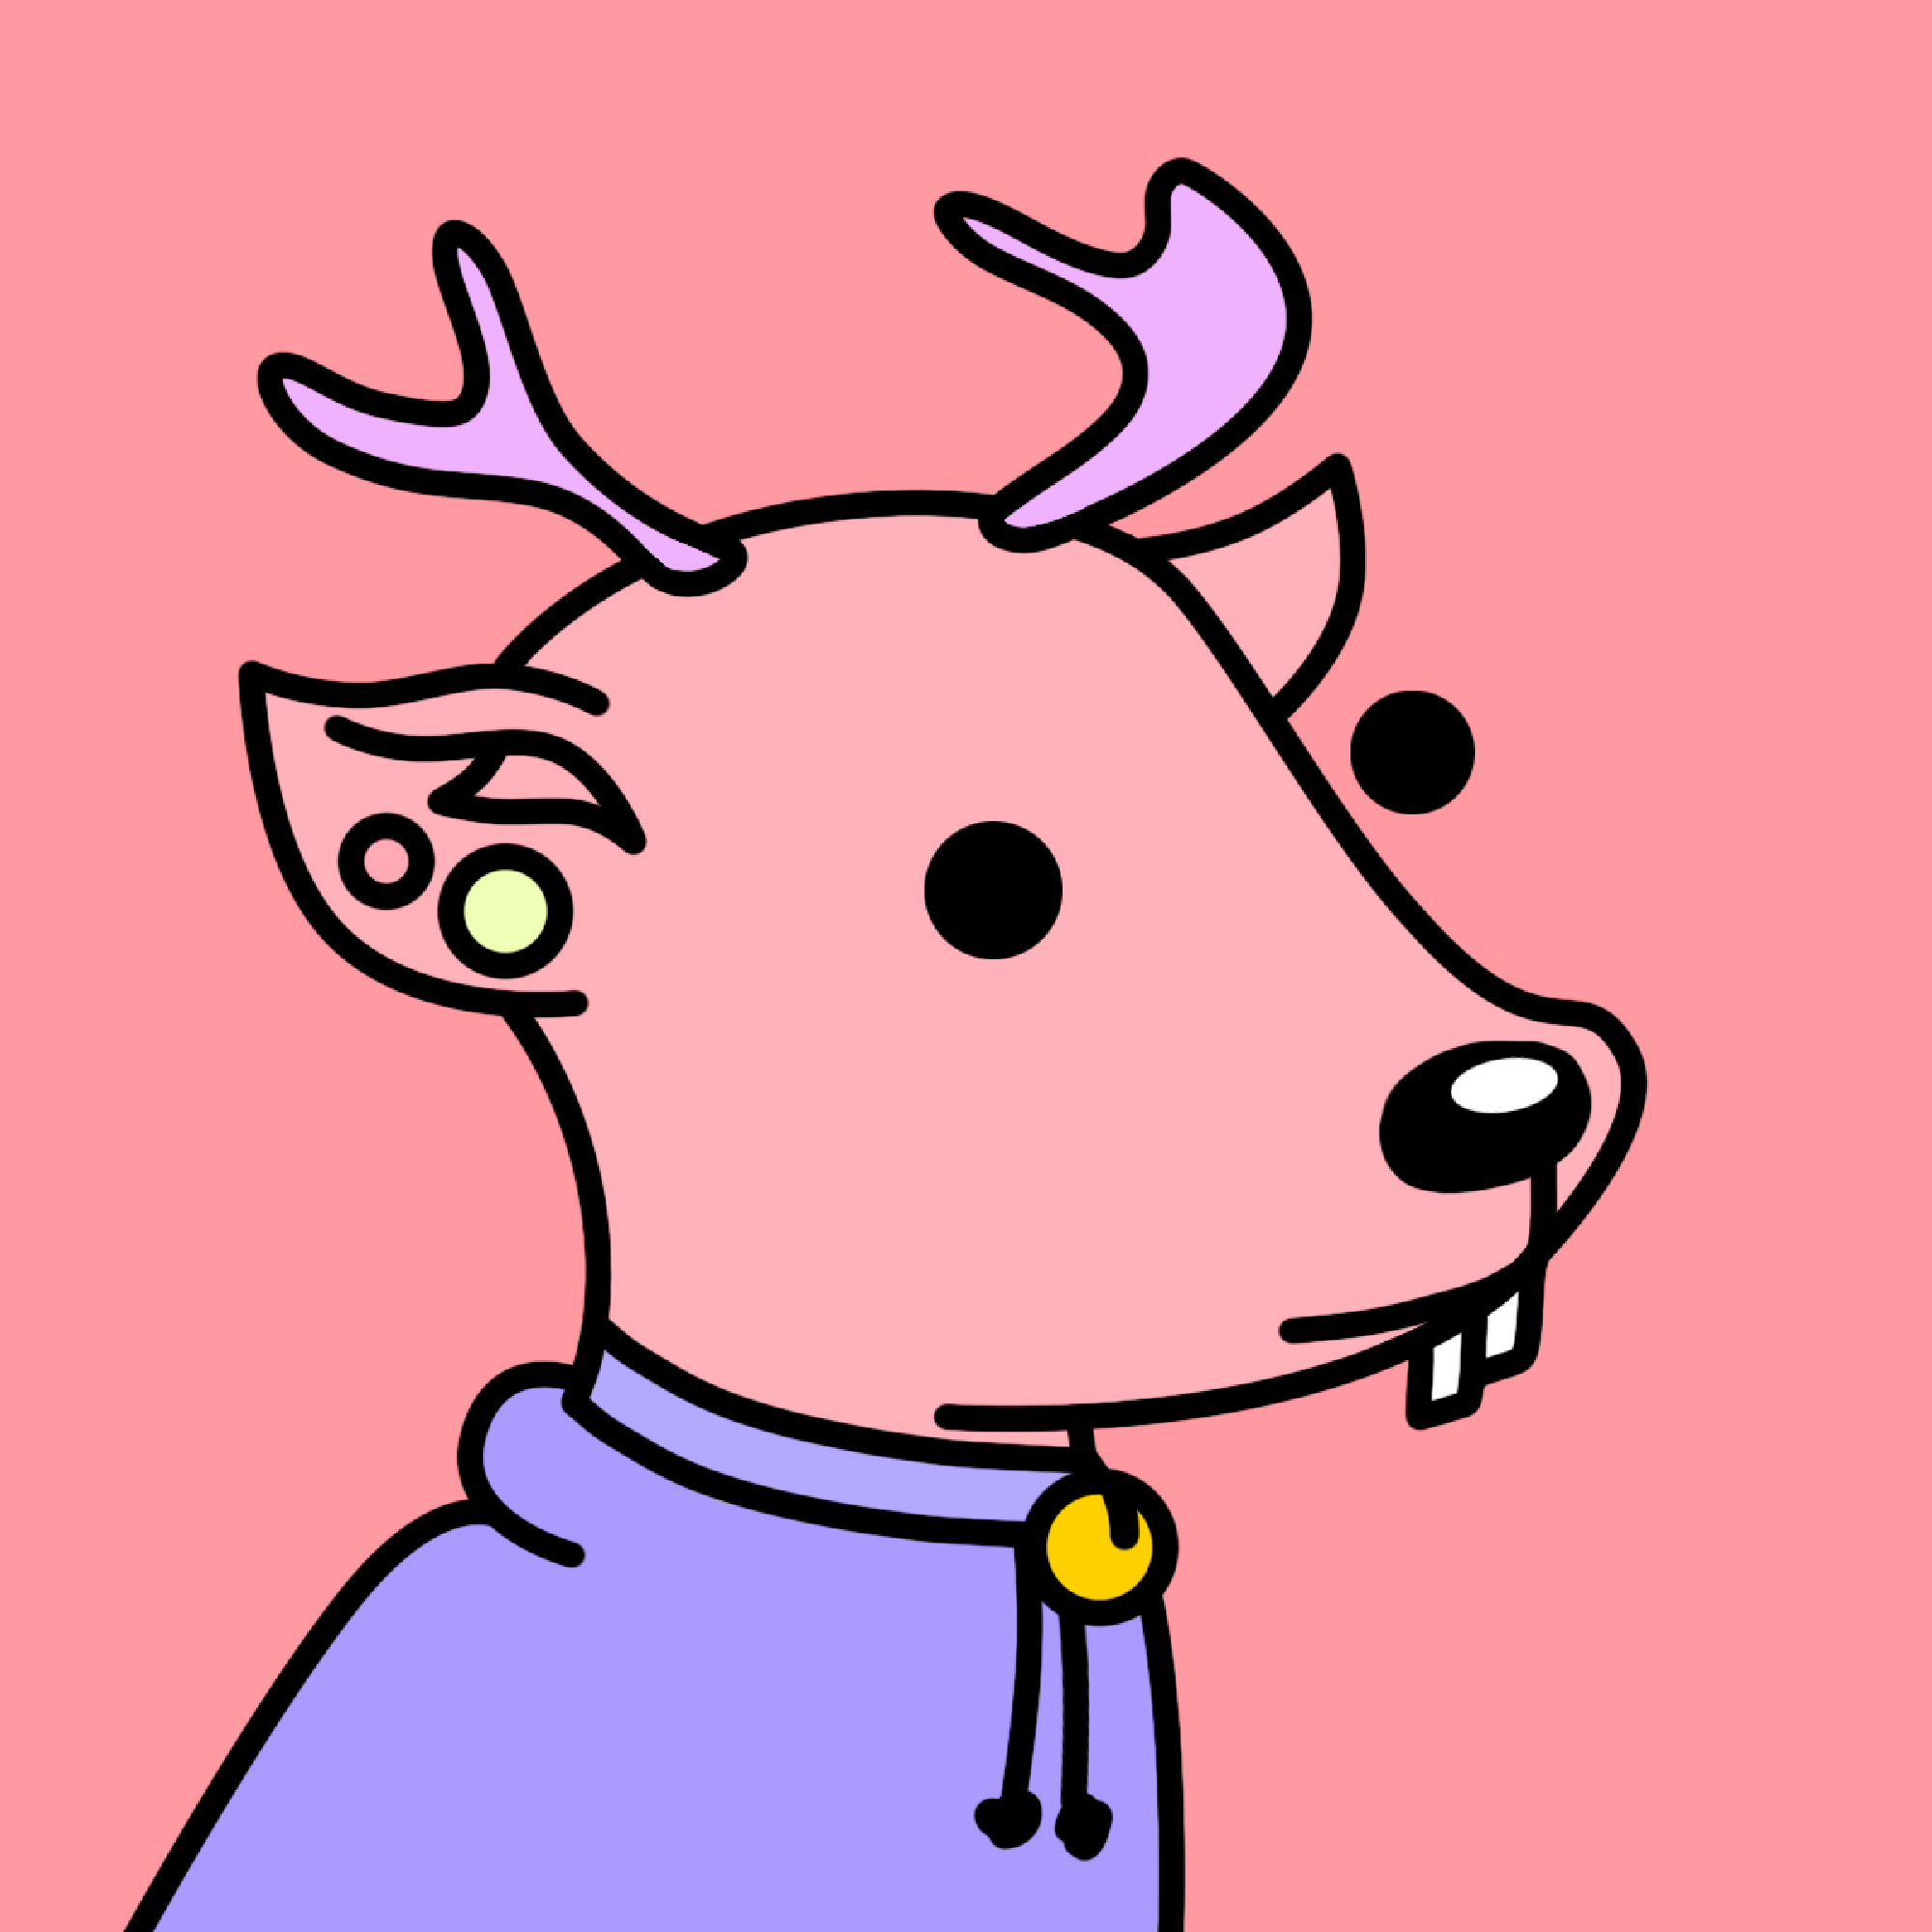 Doodled Deer#4780